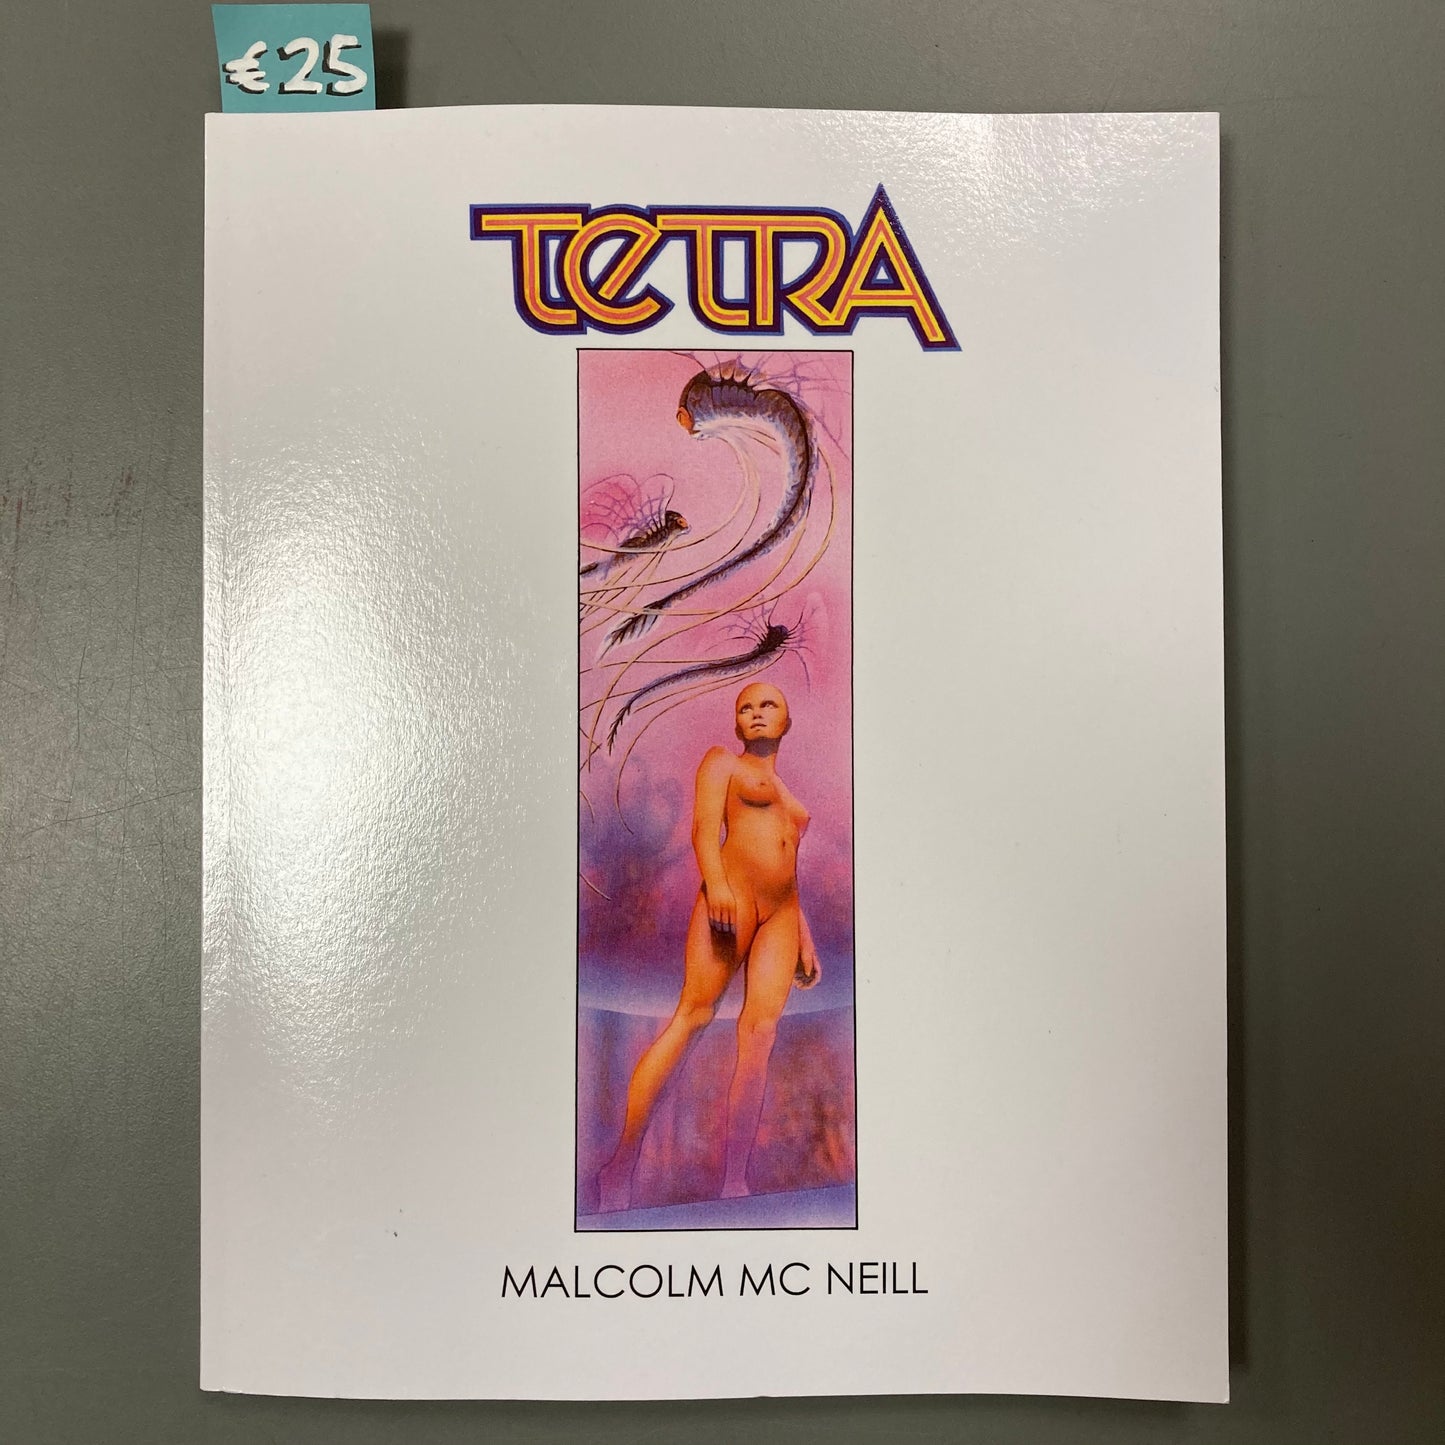 Tetra: The Restored Graphic Novel (1977-1979)